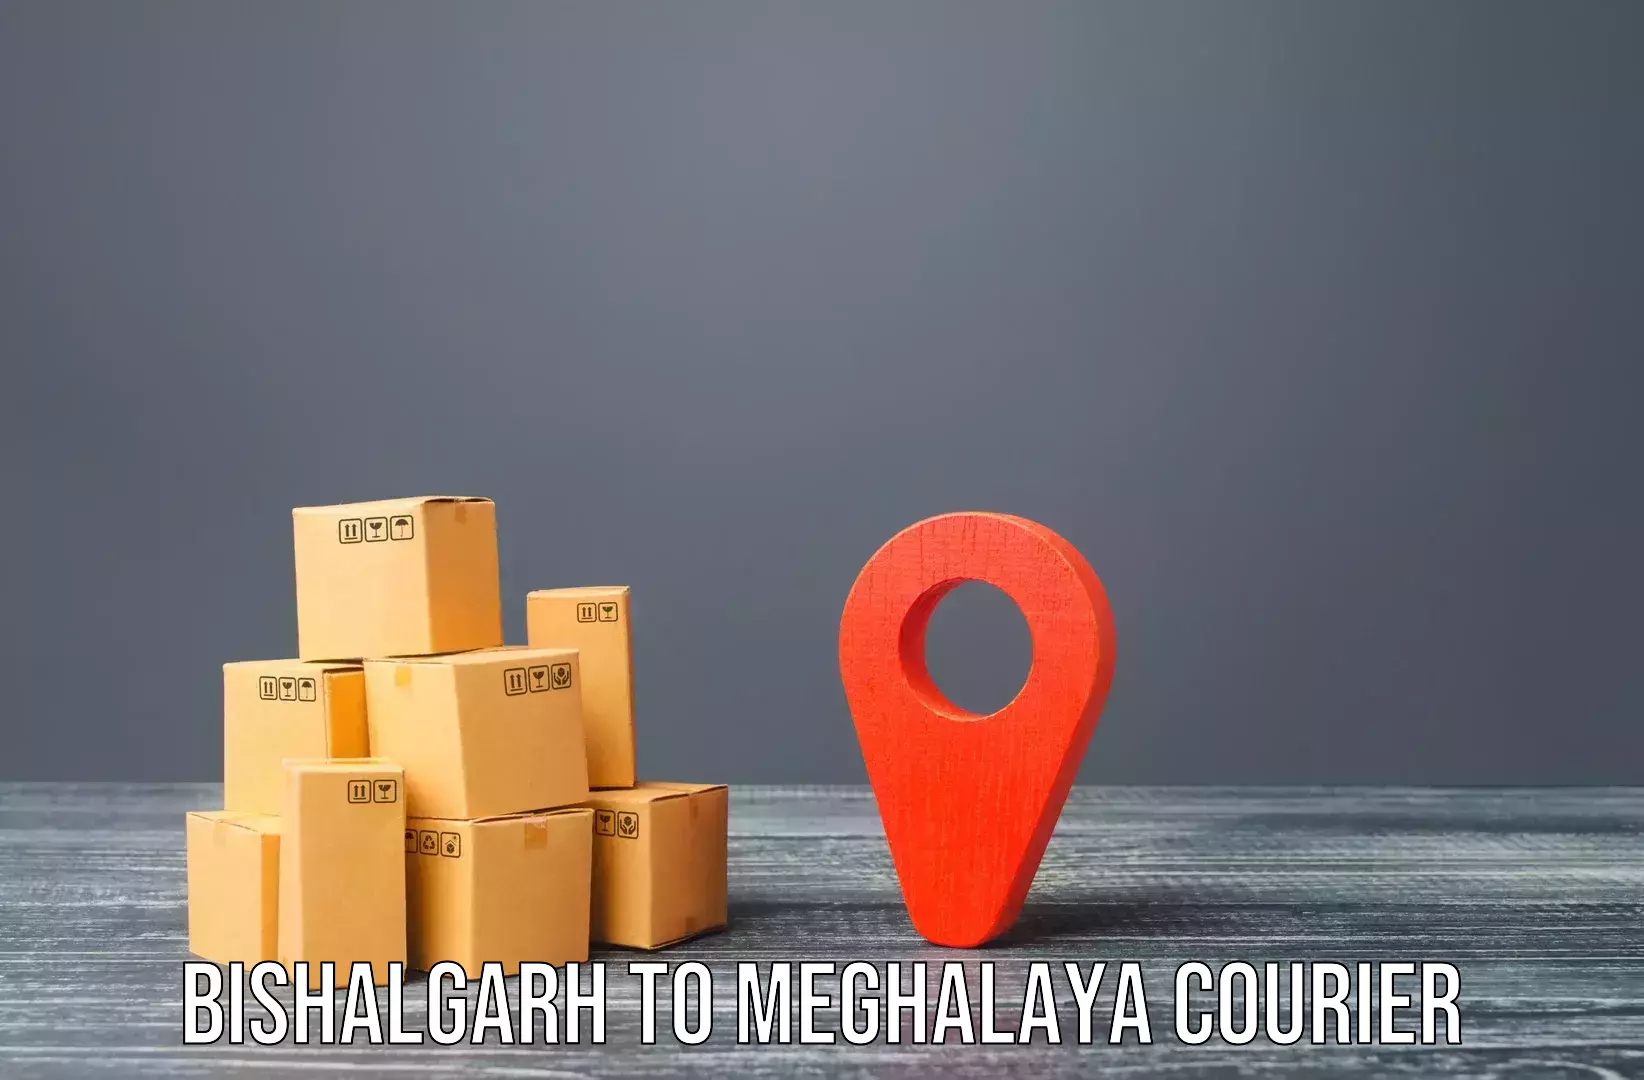 Furniture transport company Bishalgarh to Meghalaya